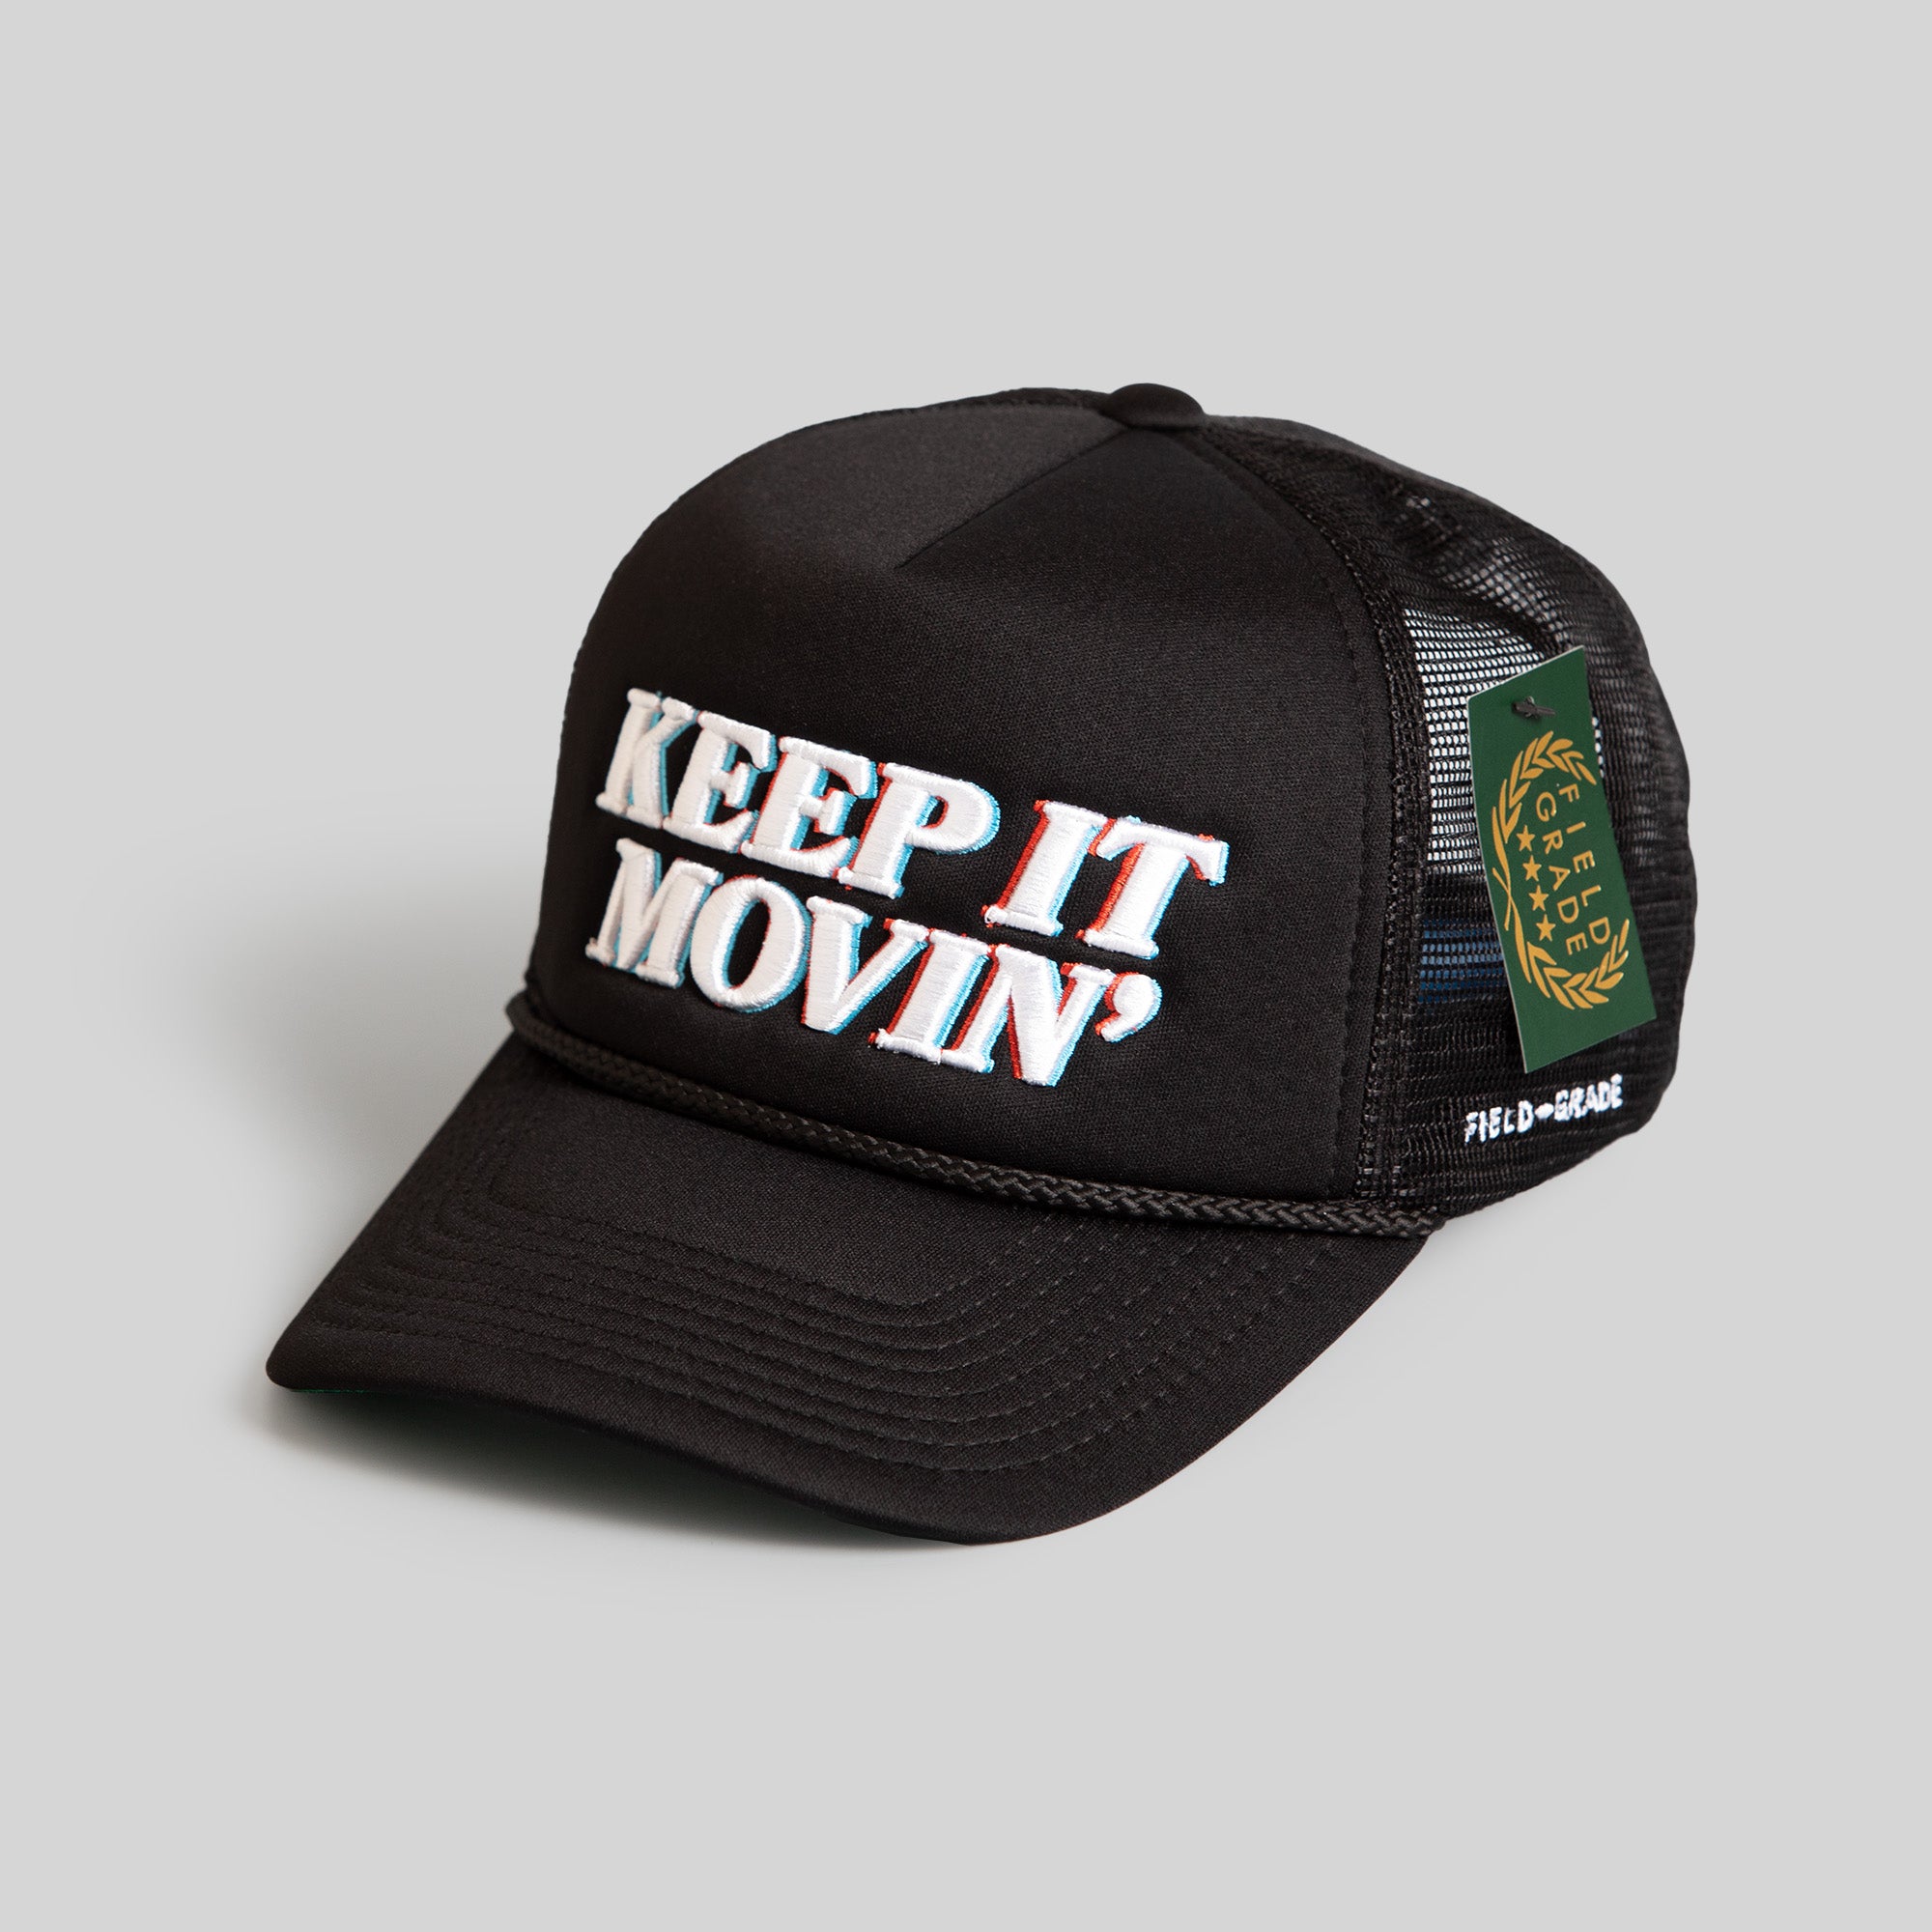 KEEP IT MOVIN' BLACK TRUCKER HAT